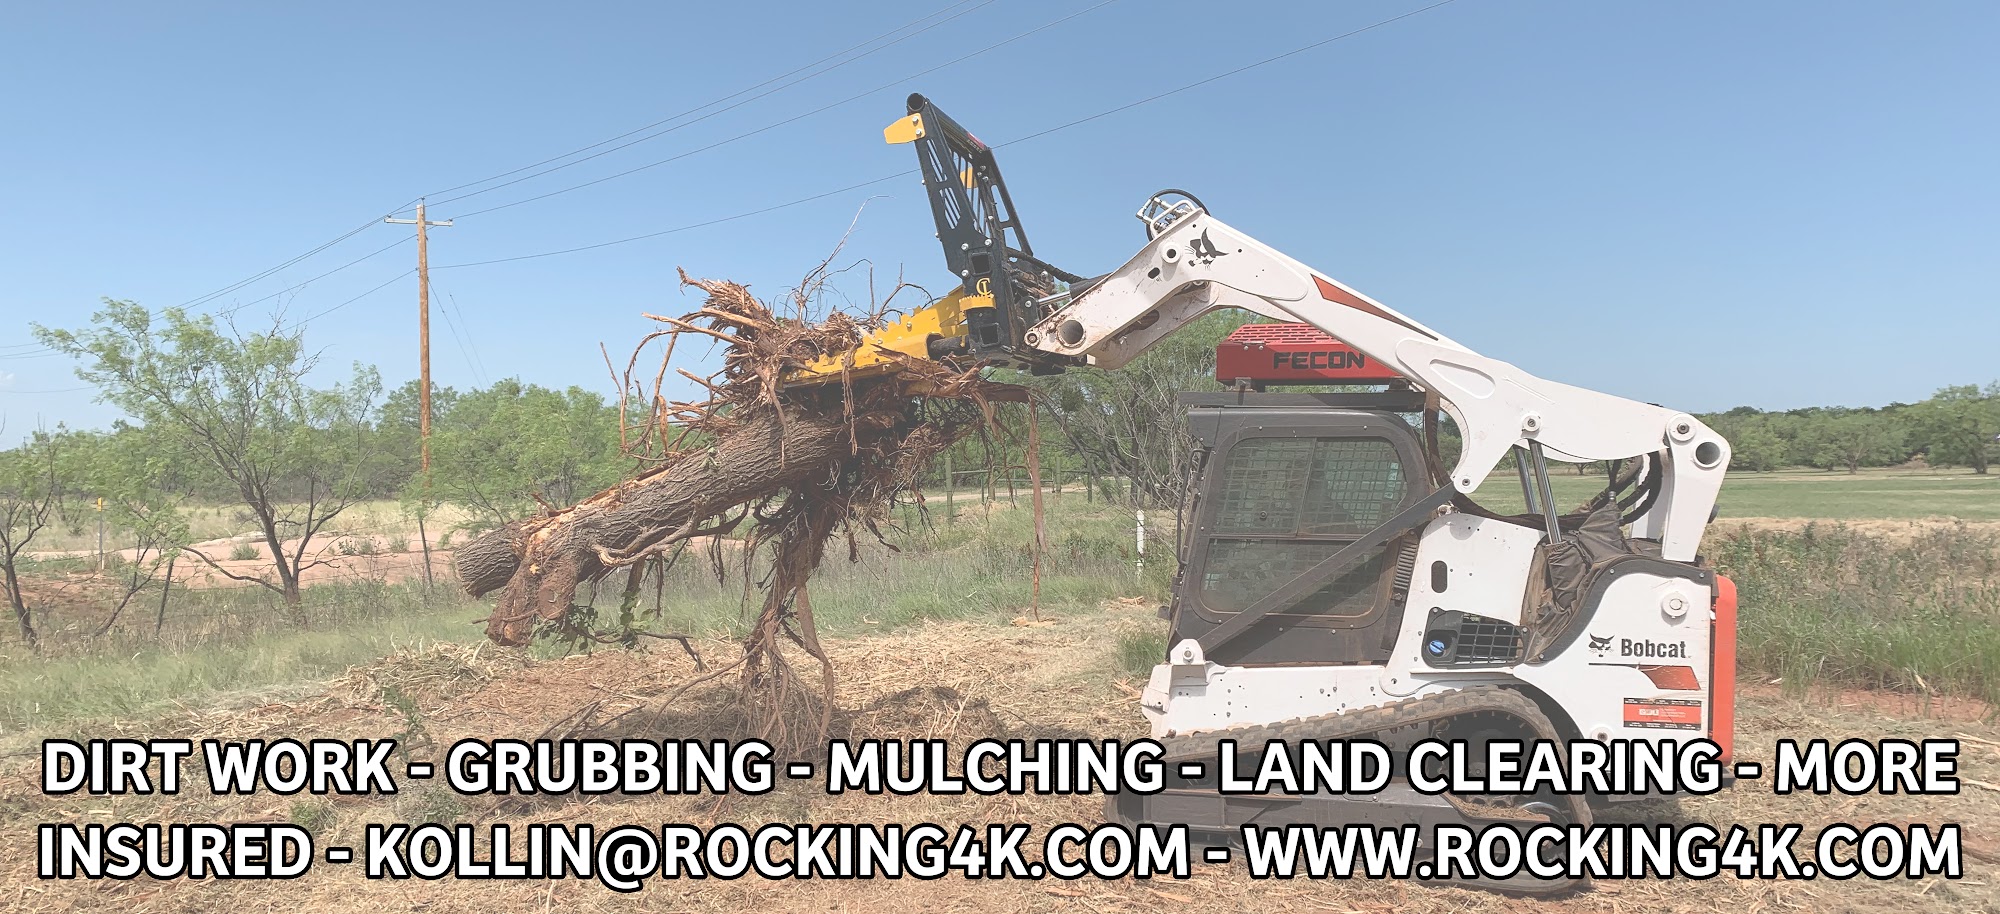 Rocking 4K Land Management and Construction